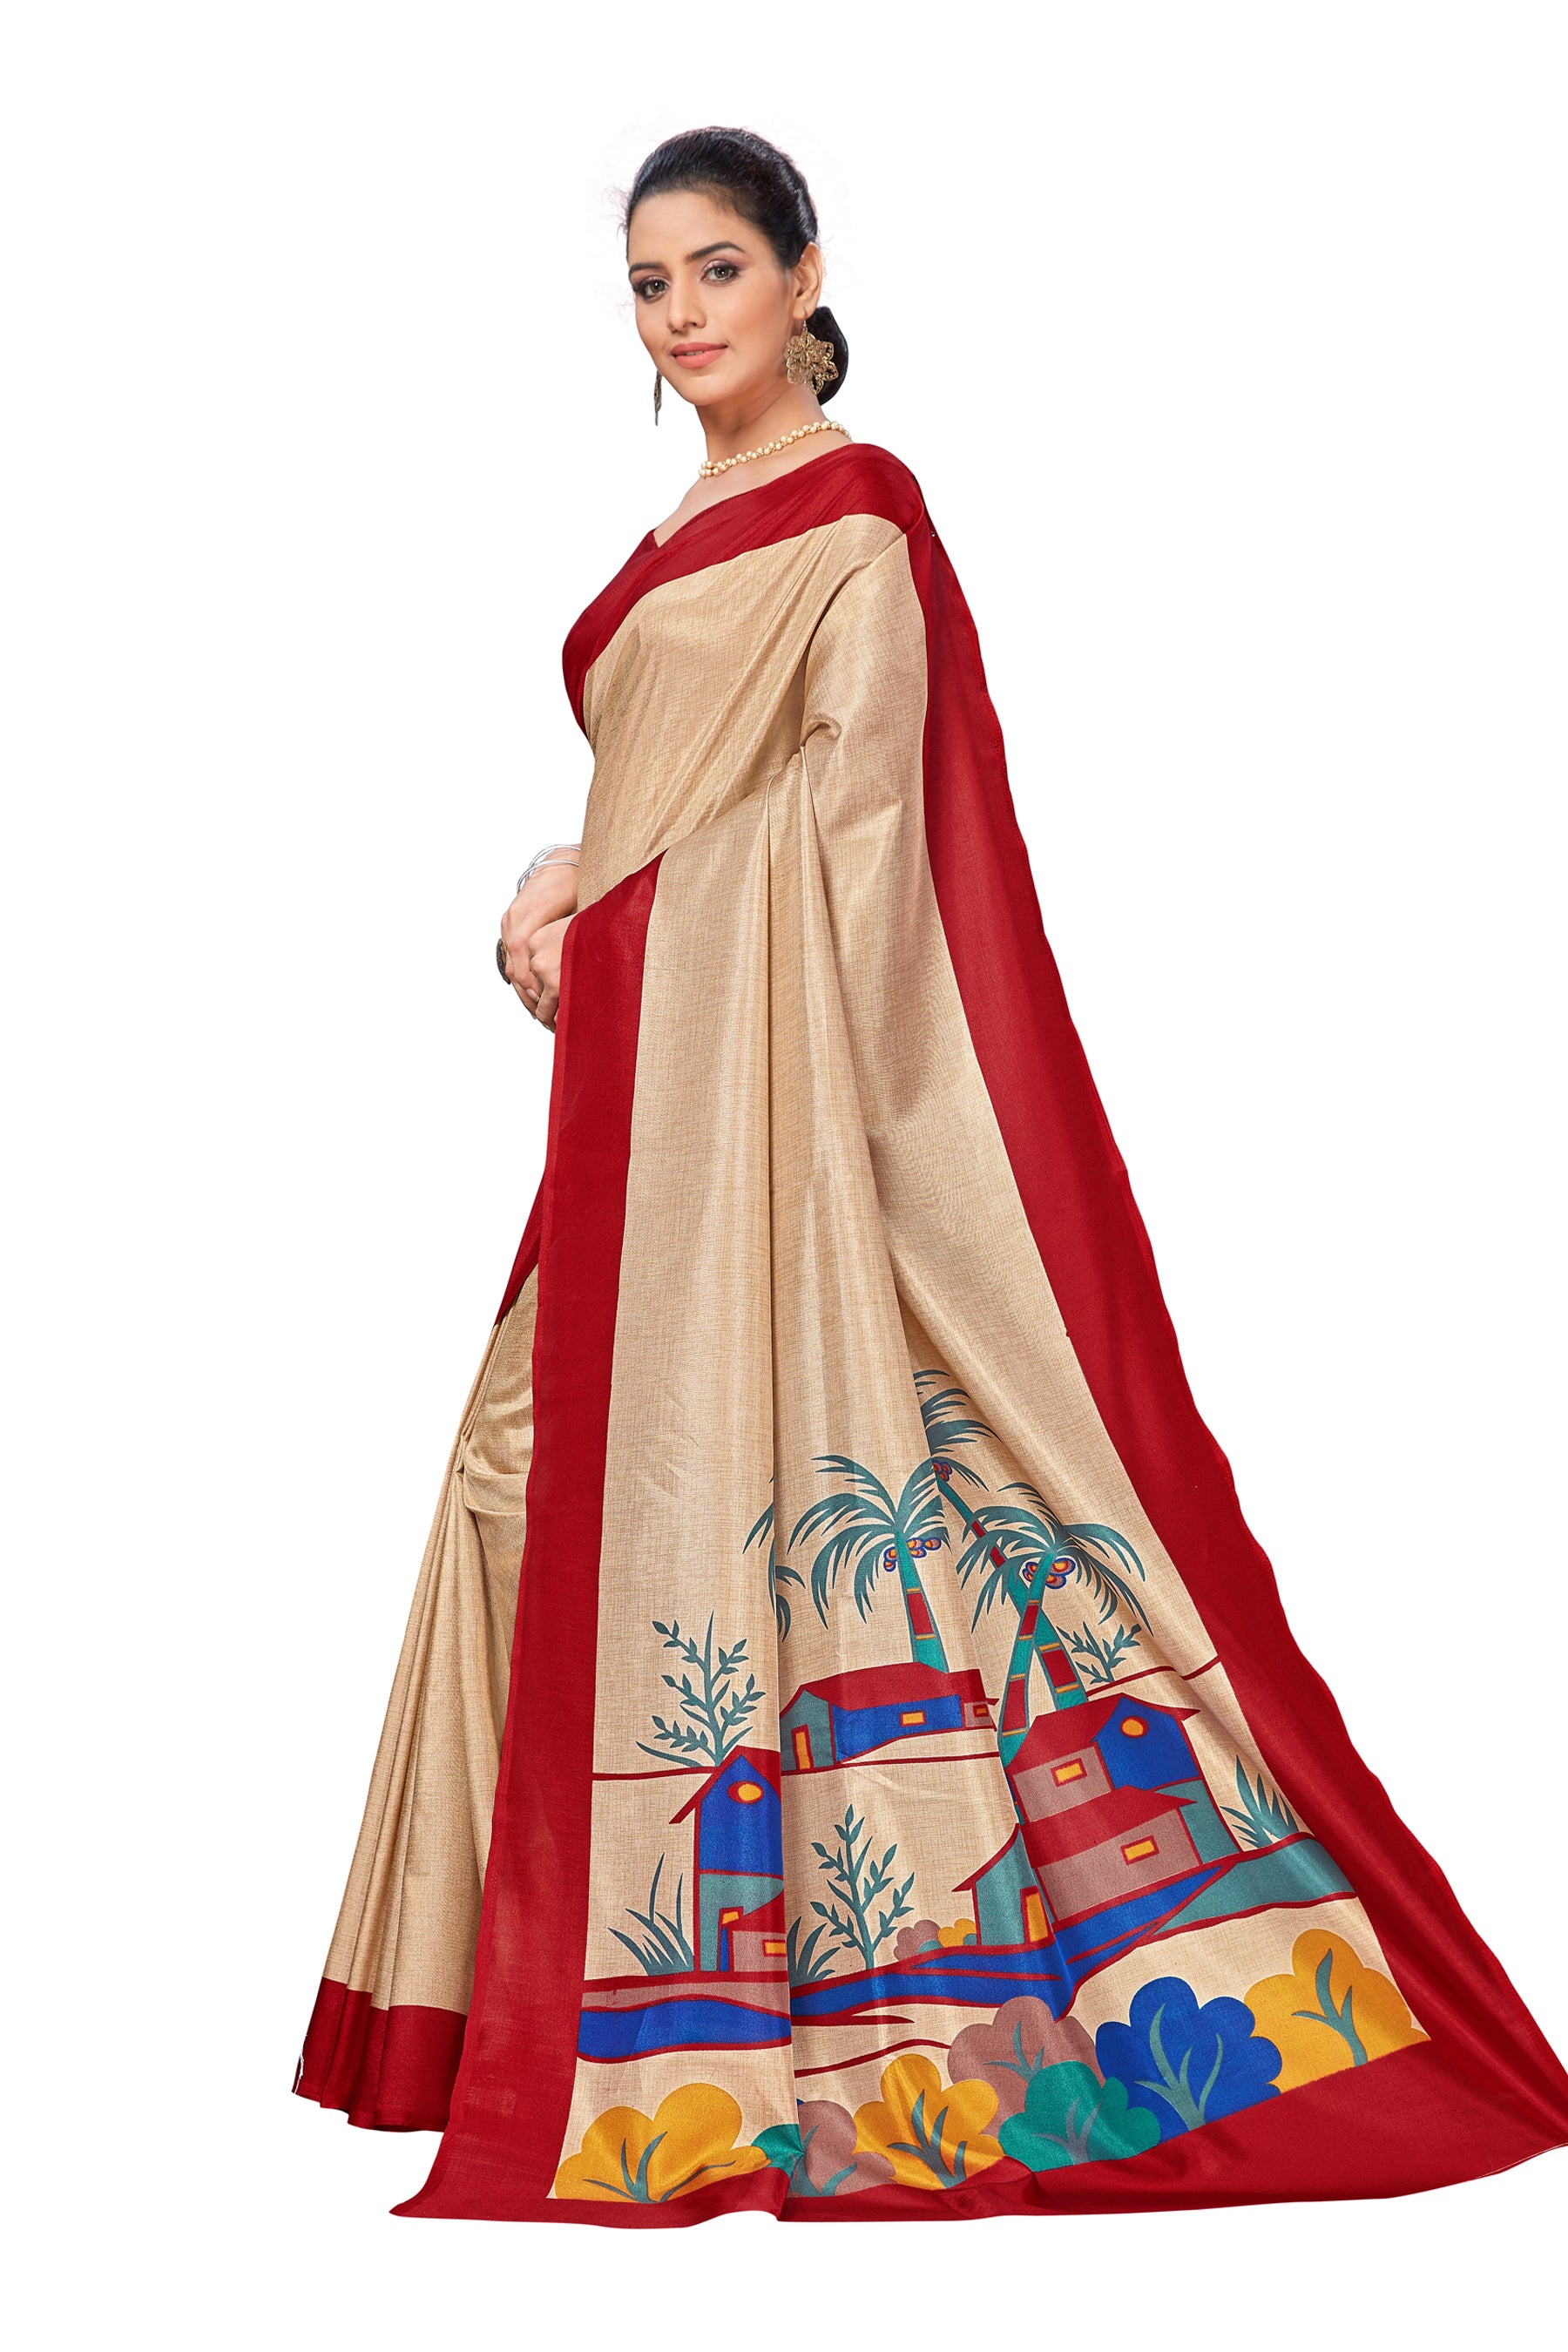 Vimla Women's Red Malgudi Art Silk Uniform Saree with Blouse (2105_Red)